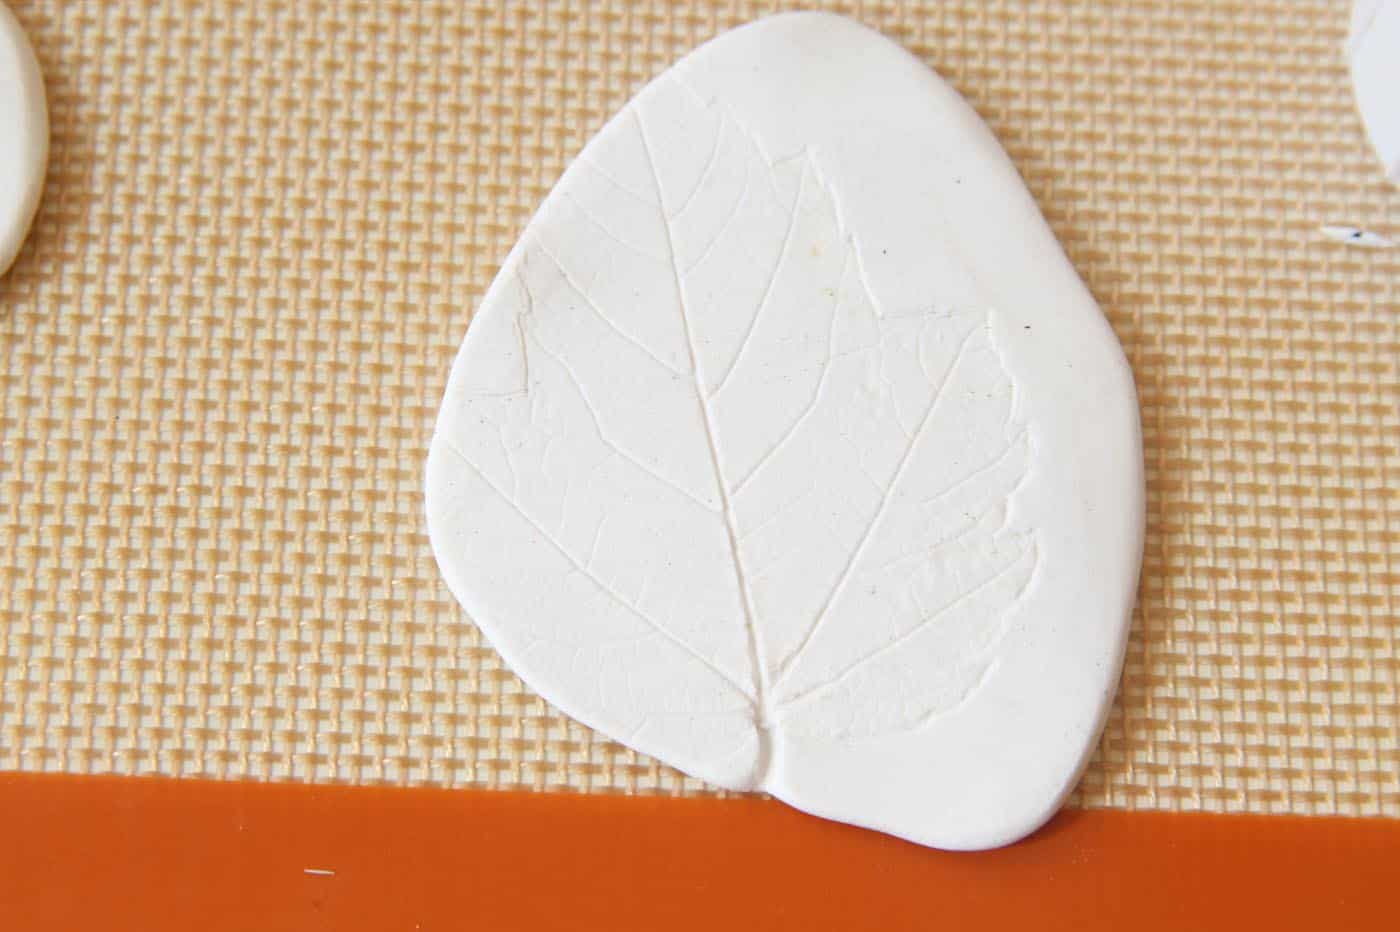 Clay piece with a leaf design